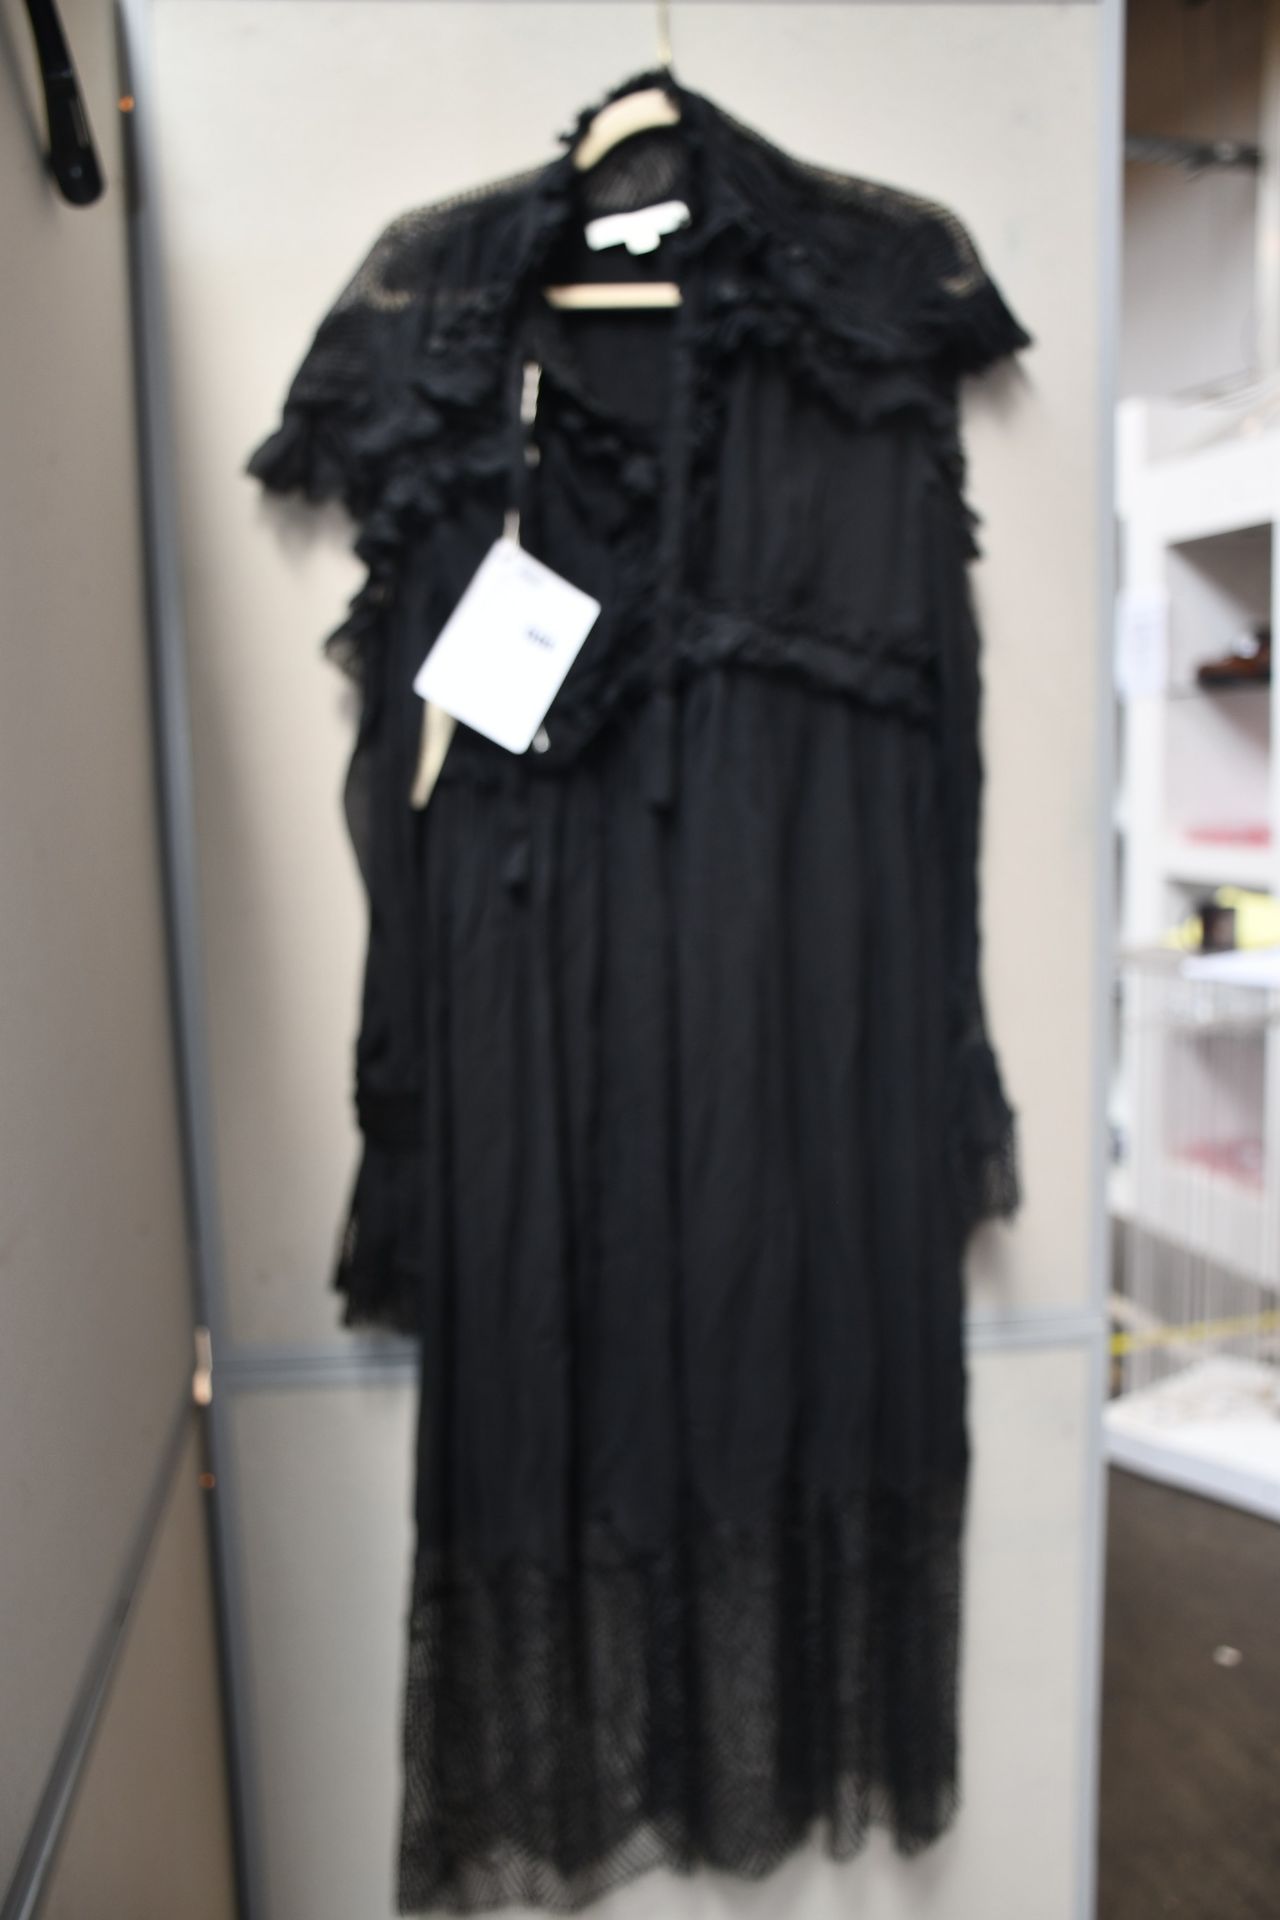 An as new Jonathan Simkhai frilled transparent dress (Size 4 - RRP £1865).